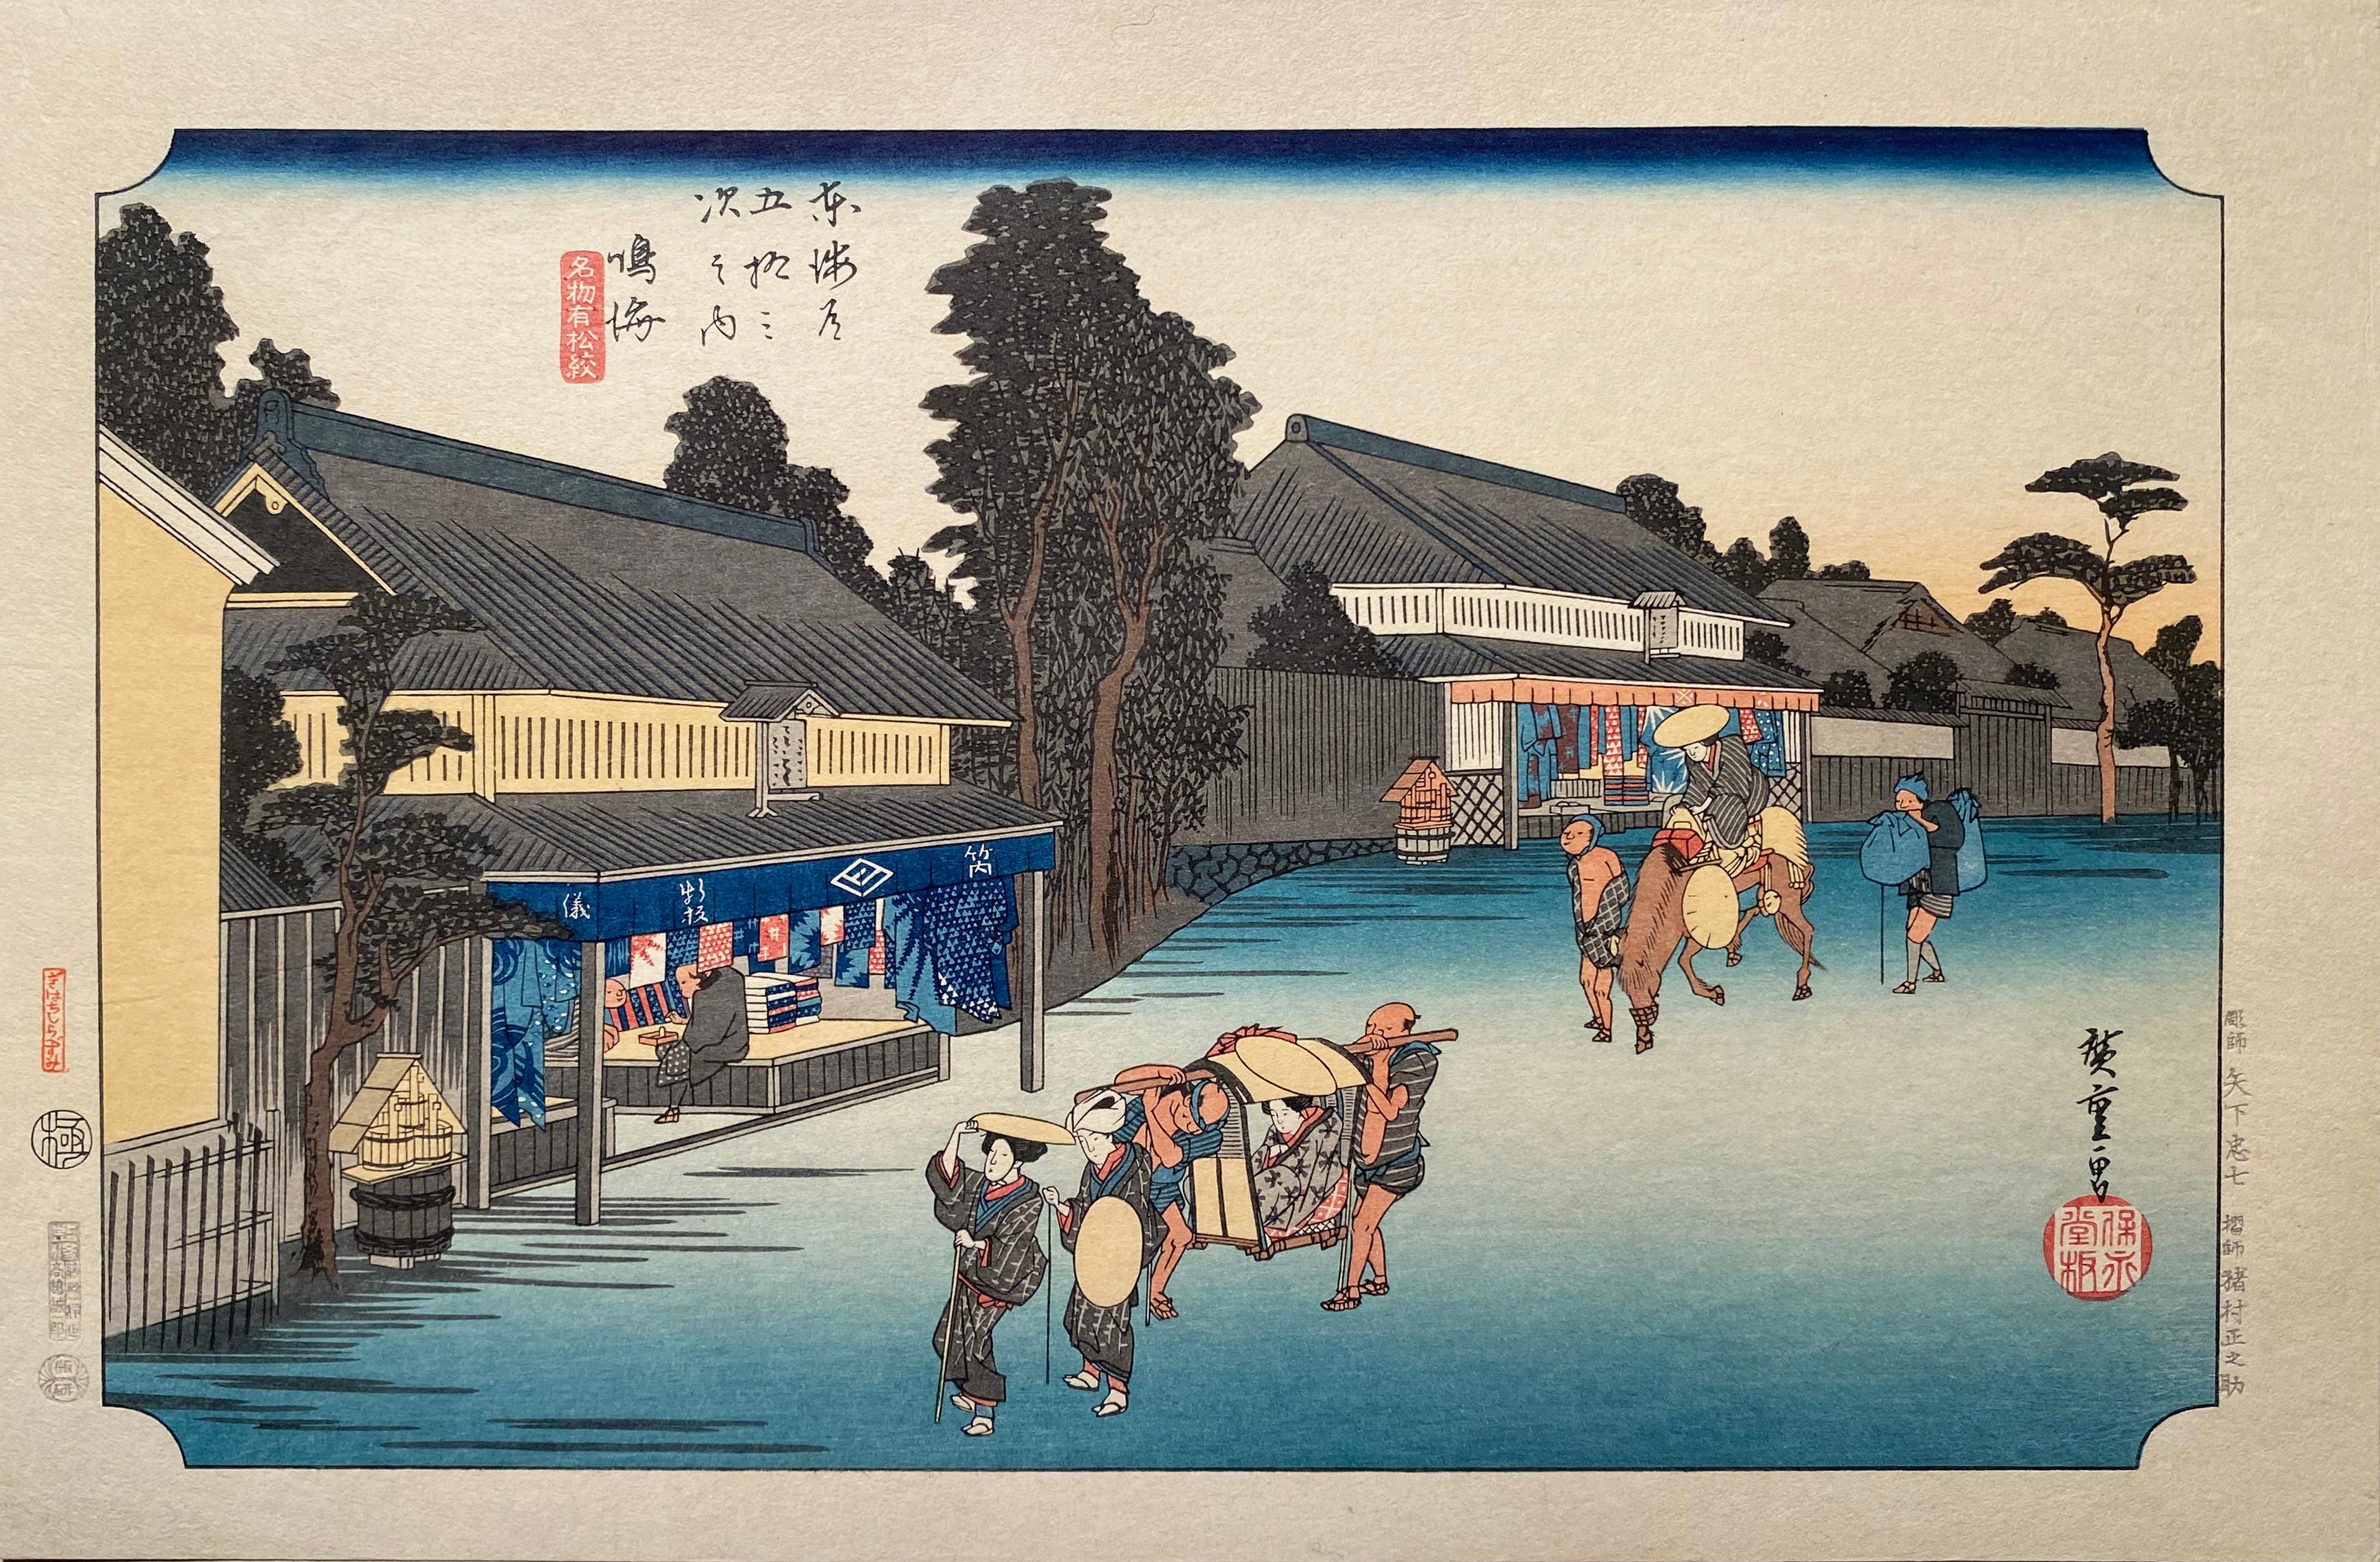 Utagawa Hiroshige (Ando Hiroshige) Landscape Print - 'View of Narumi', After Utagawa Hiroshige 歌川廣重, Ukiyo-e Woodblock, Tokaido